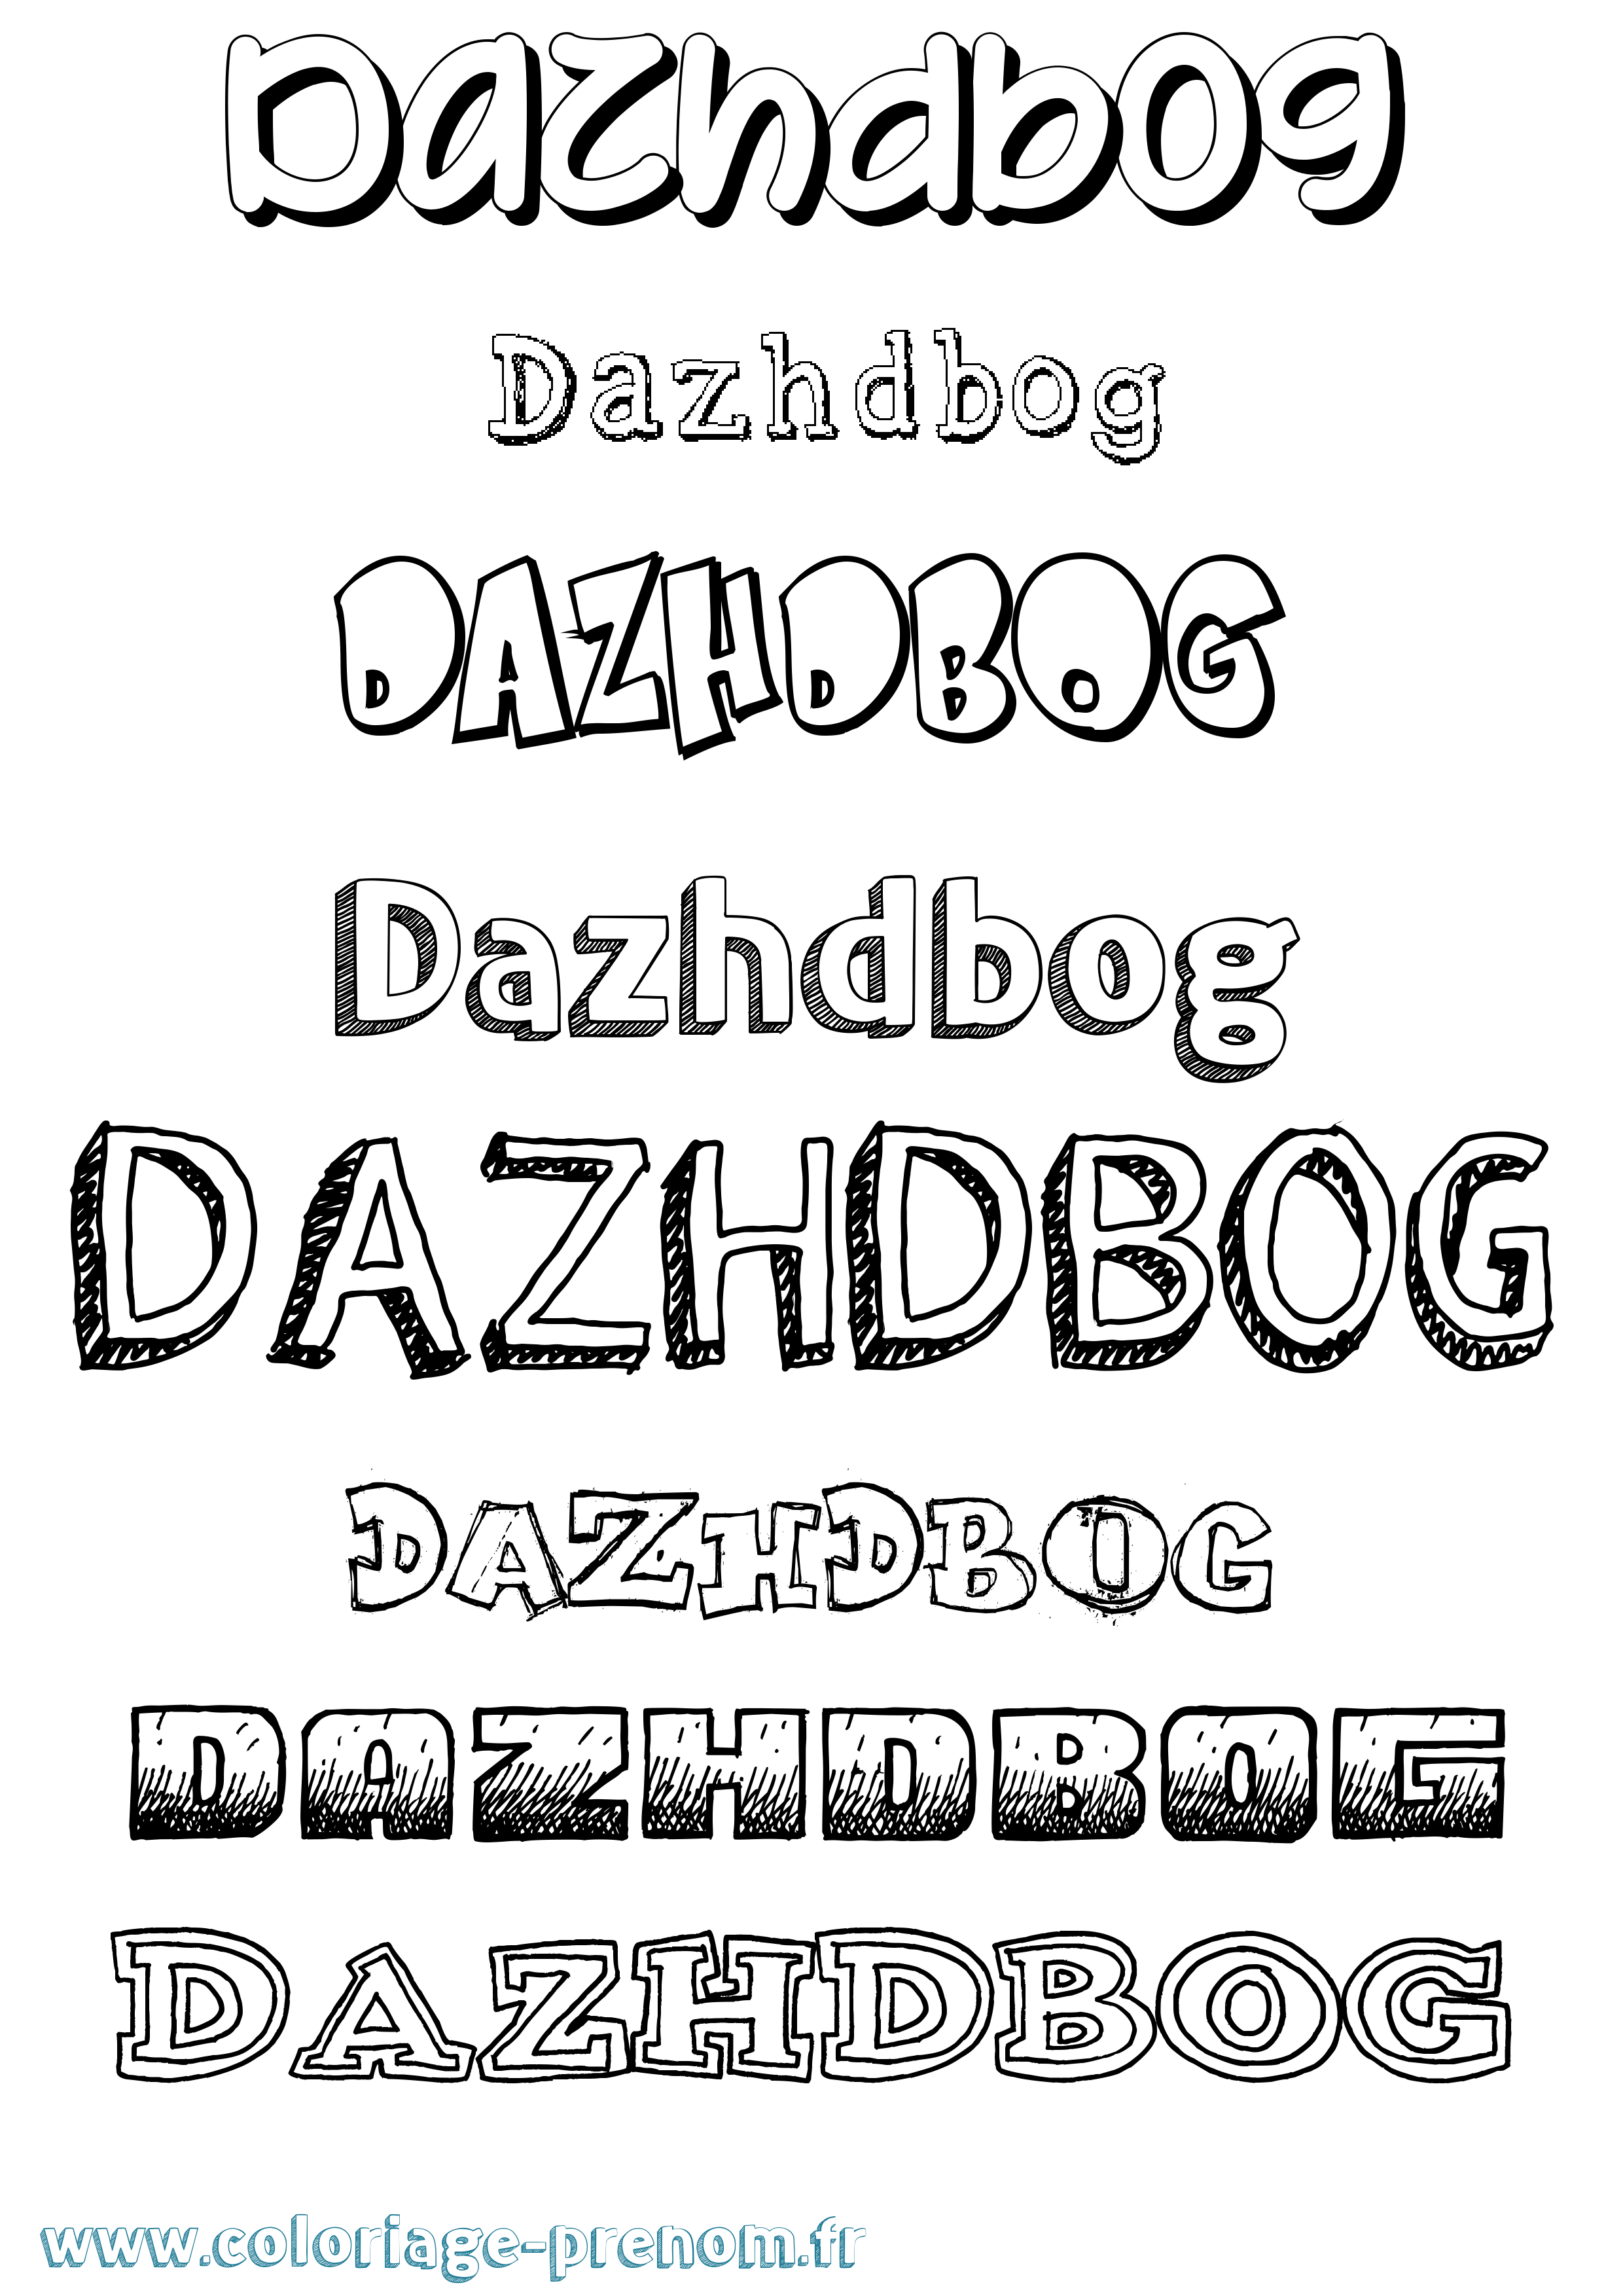 Coloriage prénom Dazhdbog Dessiné